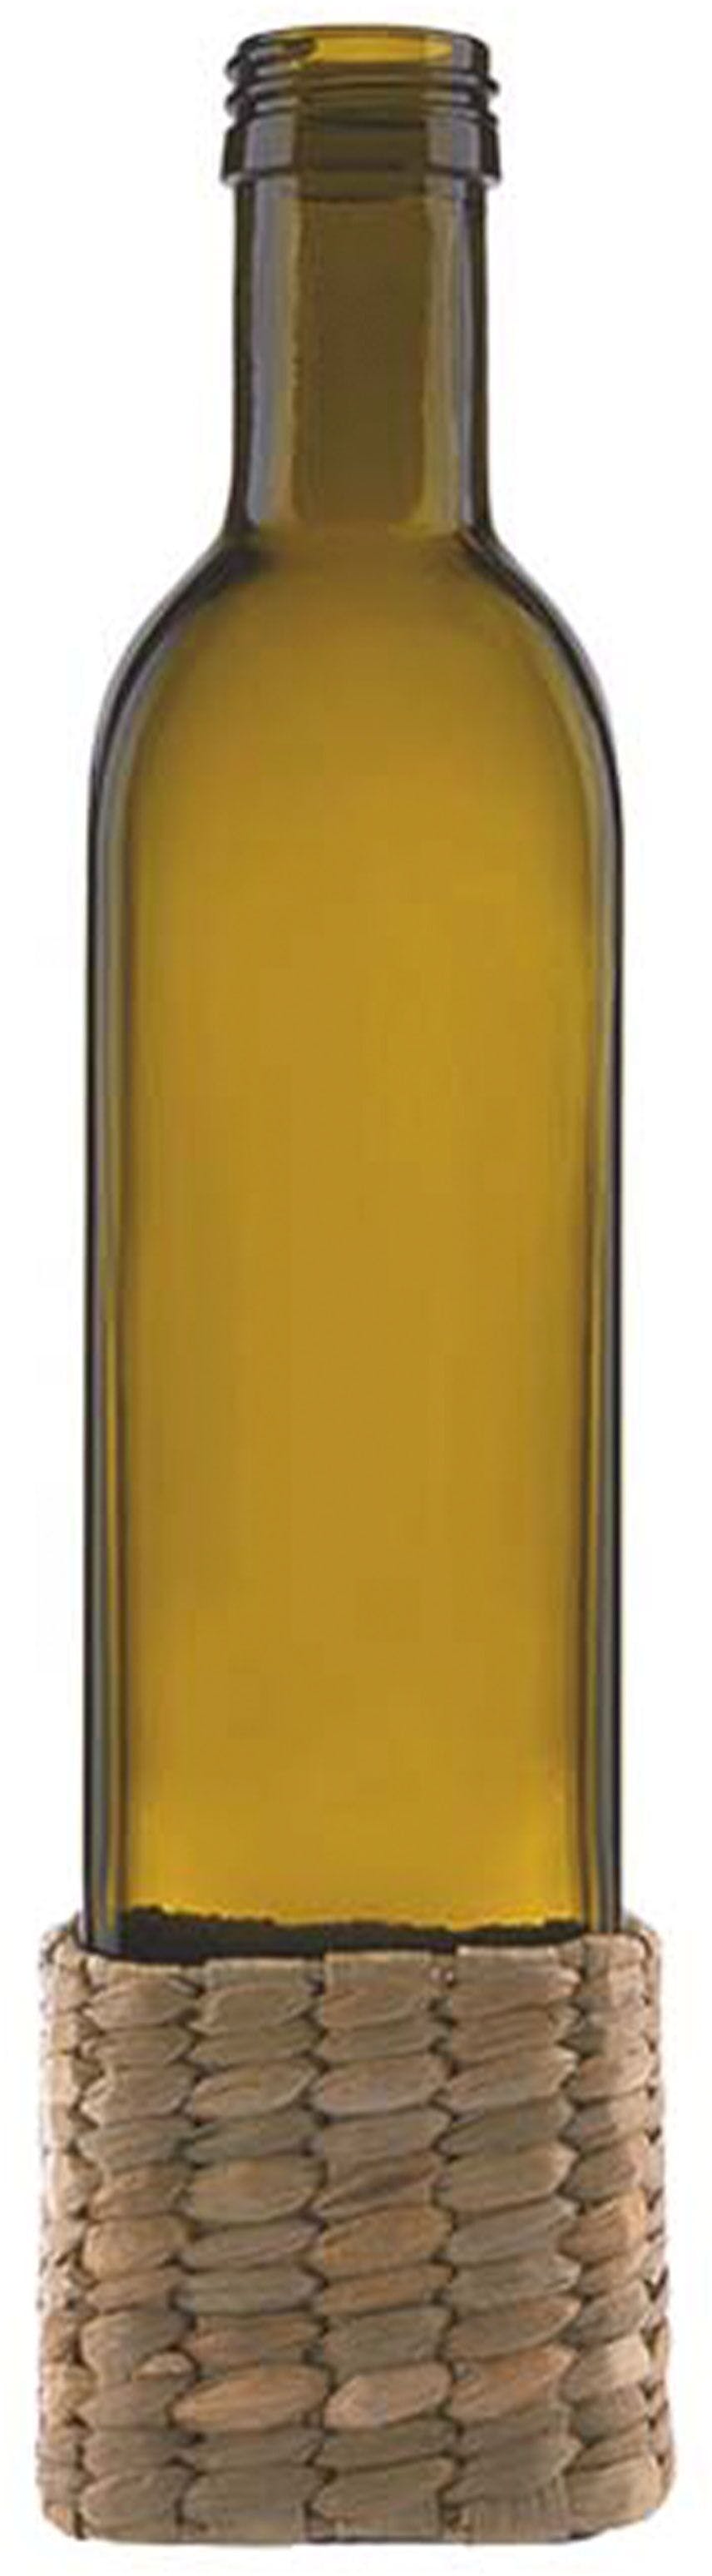 Bottle MARASCA 500 P31,5 VA RIV. CRD